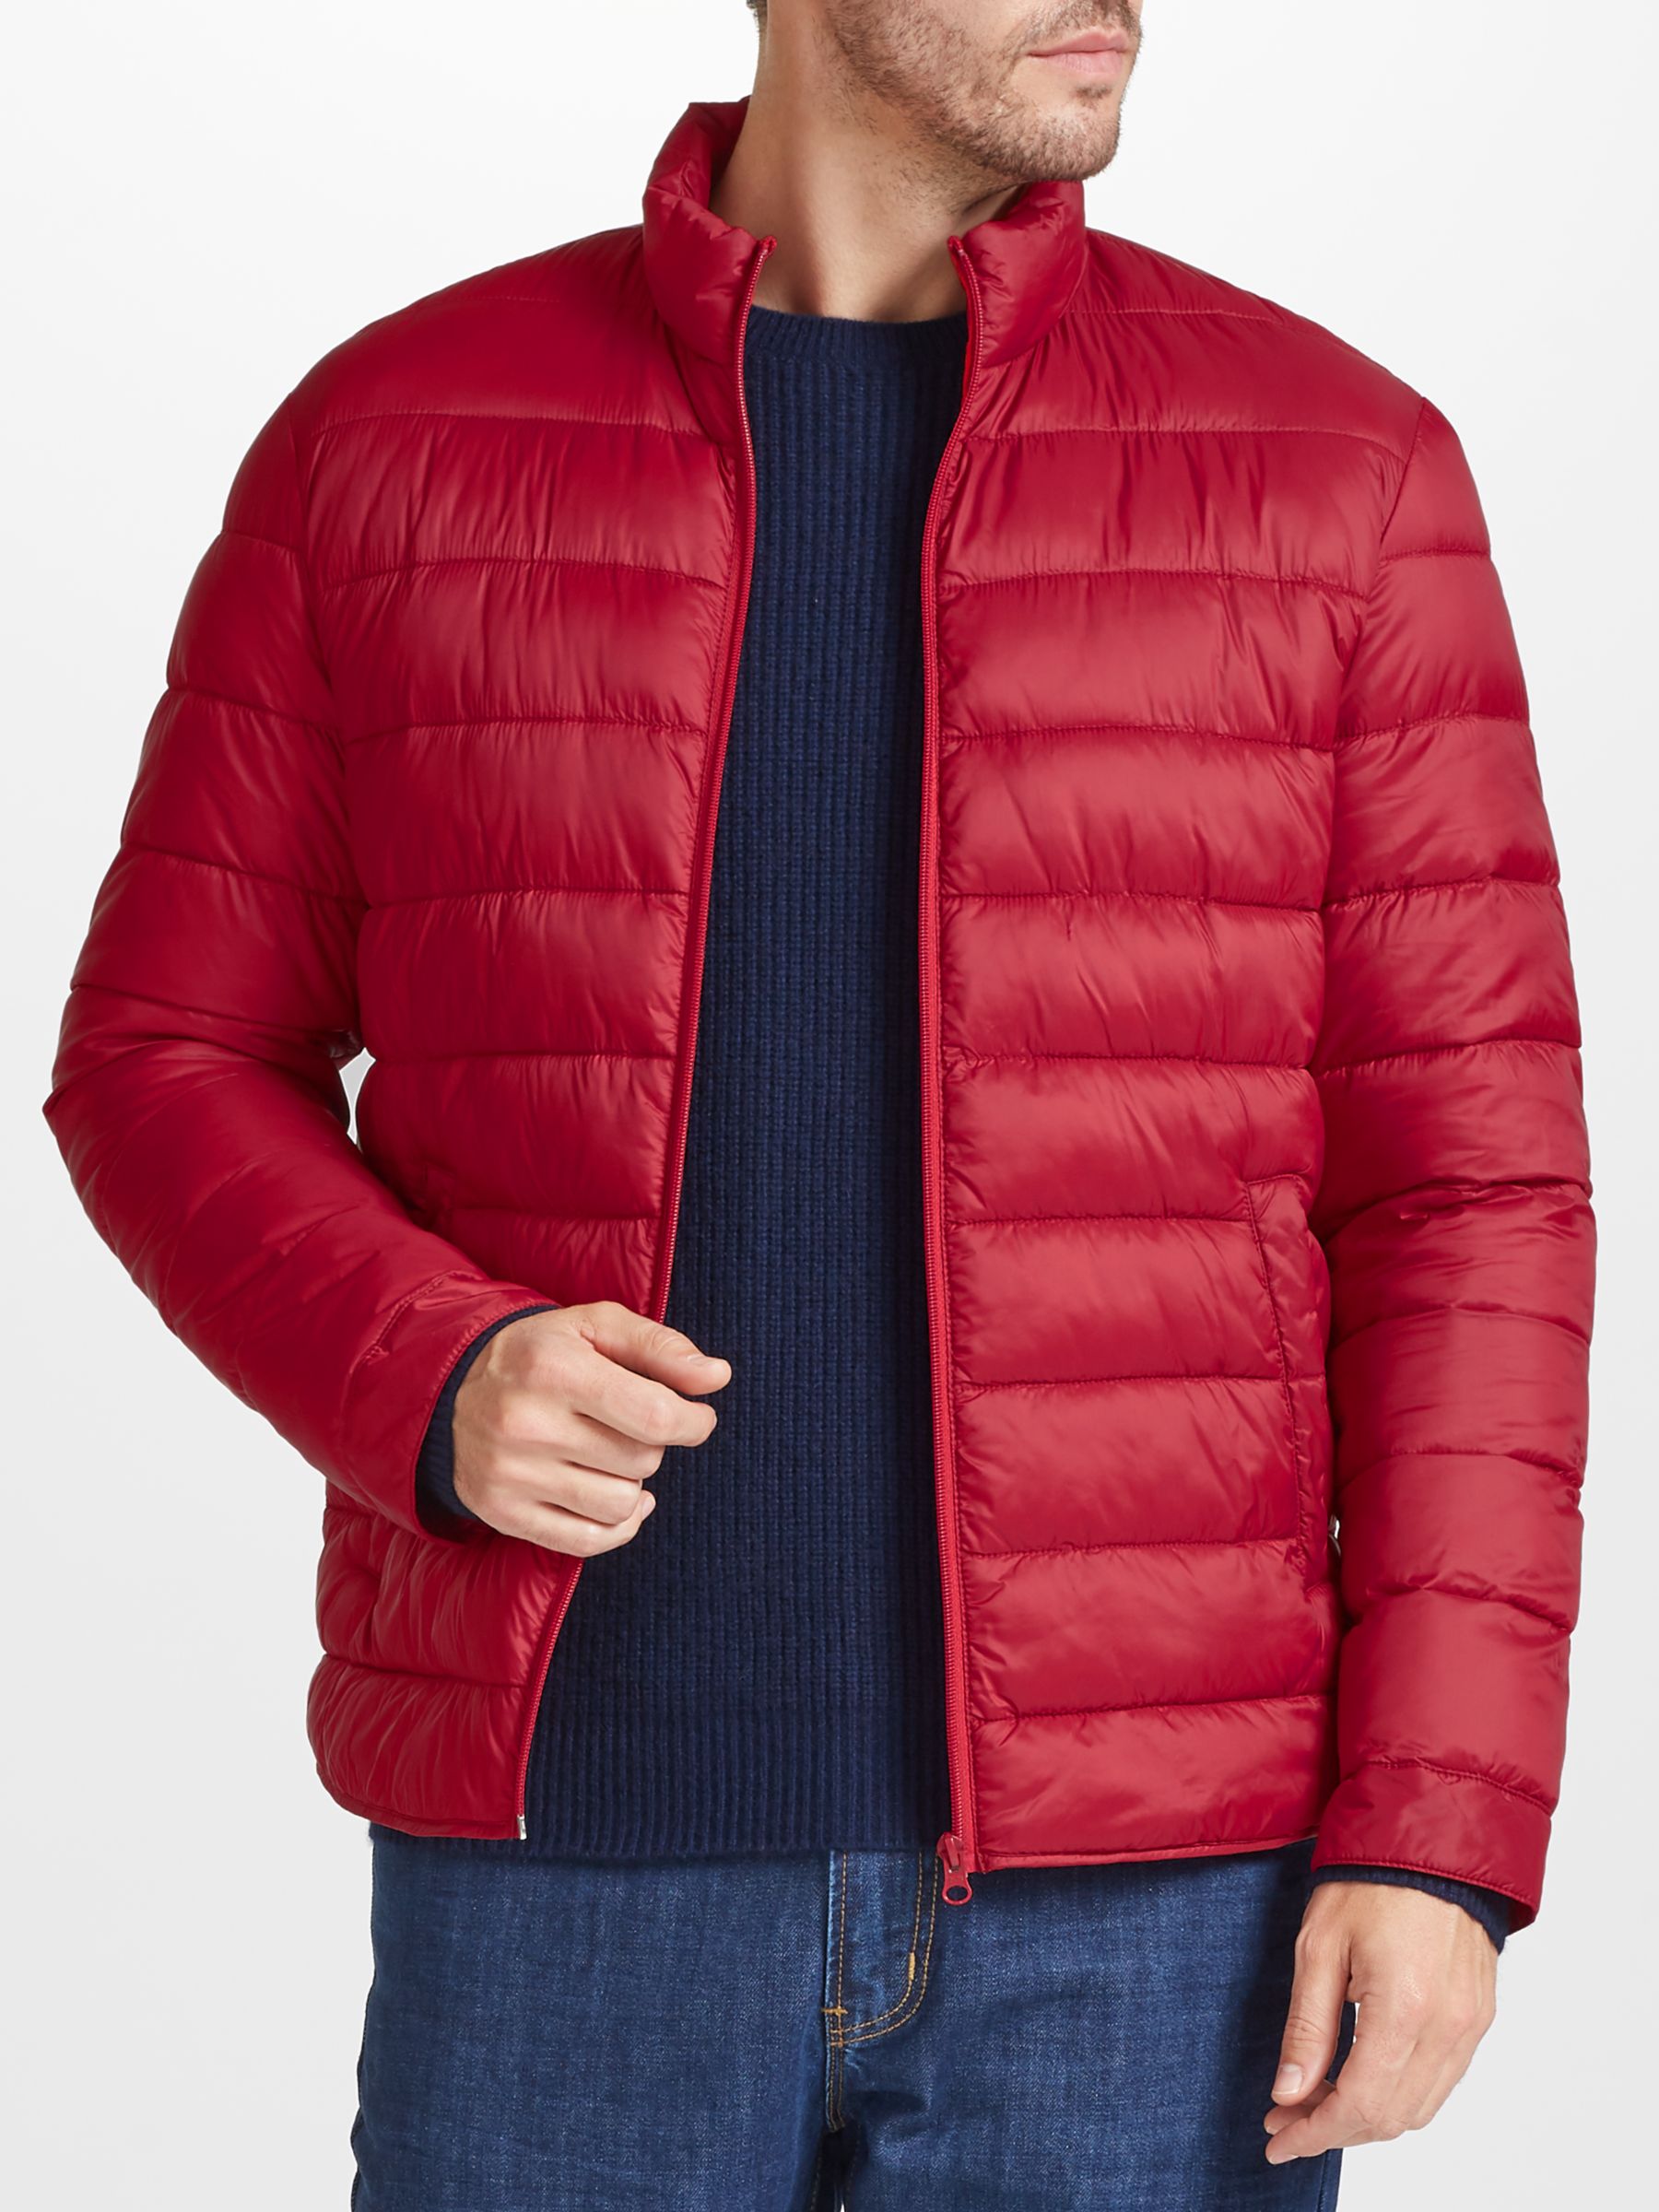 John Lewis & Partners Padded Foldaway Jacket, Red, S